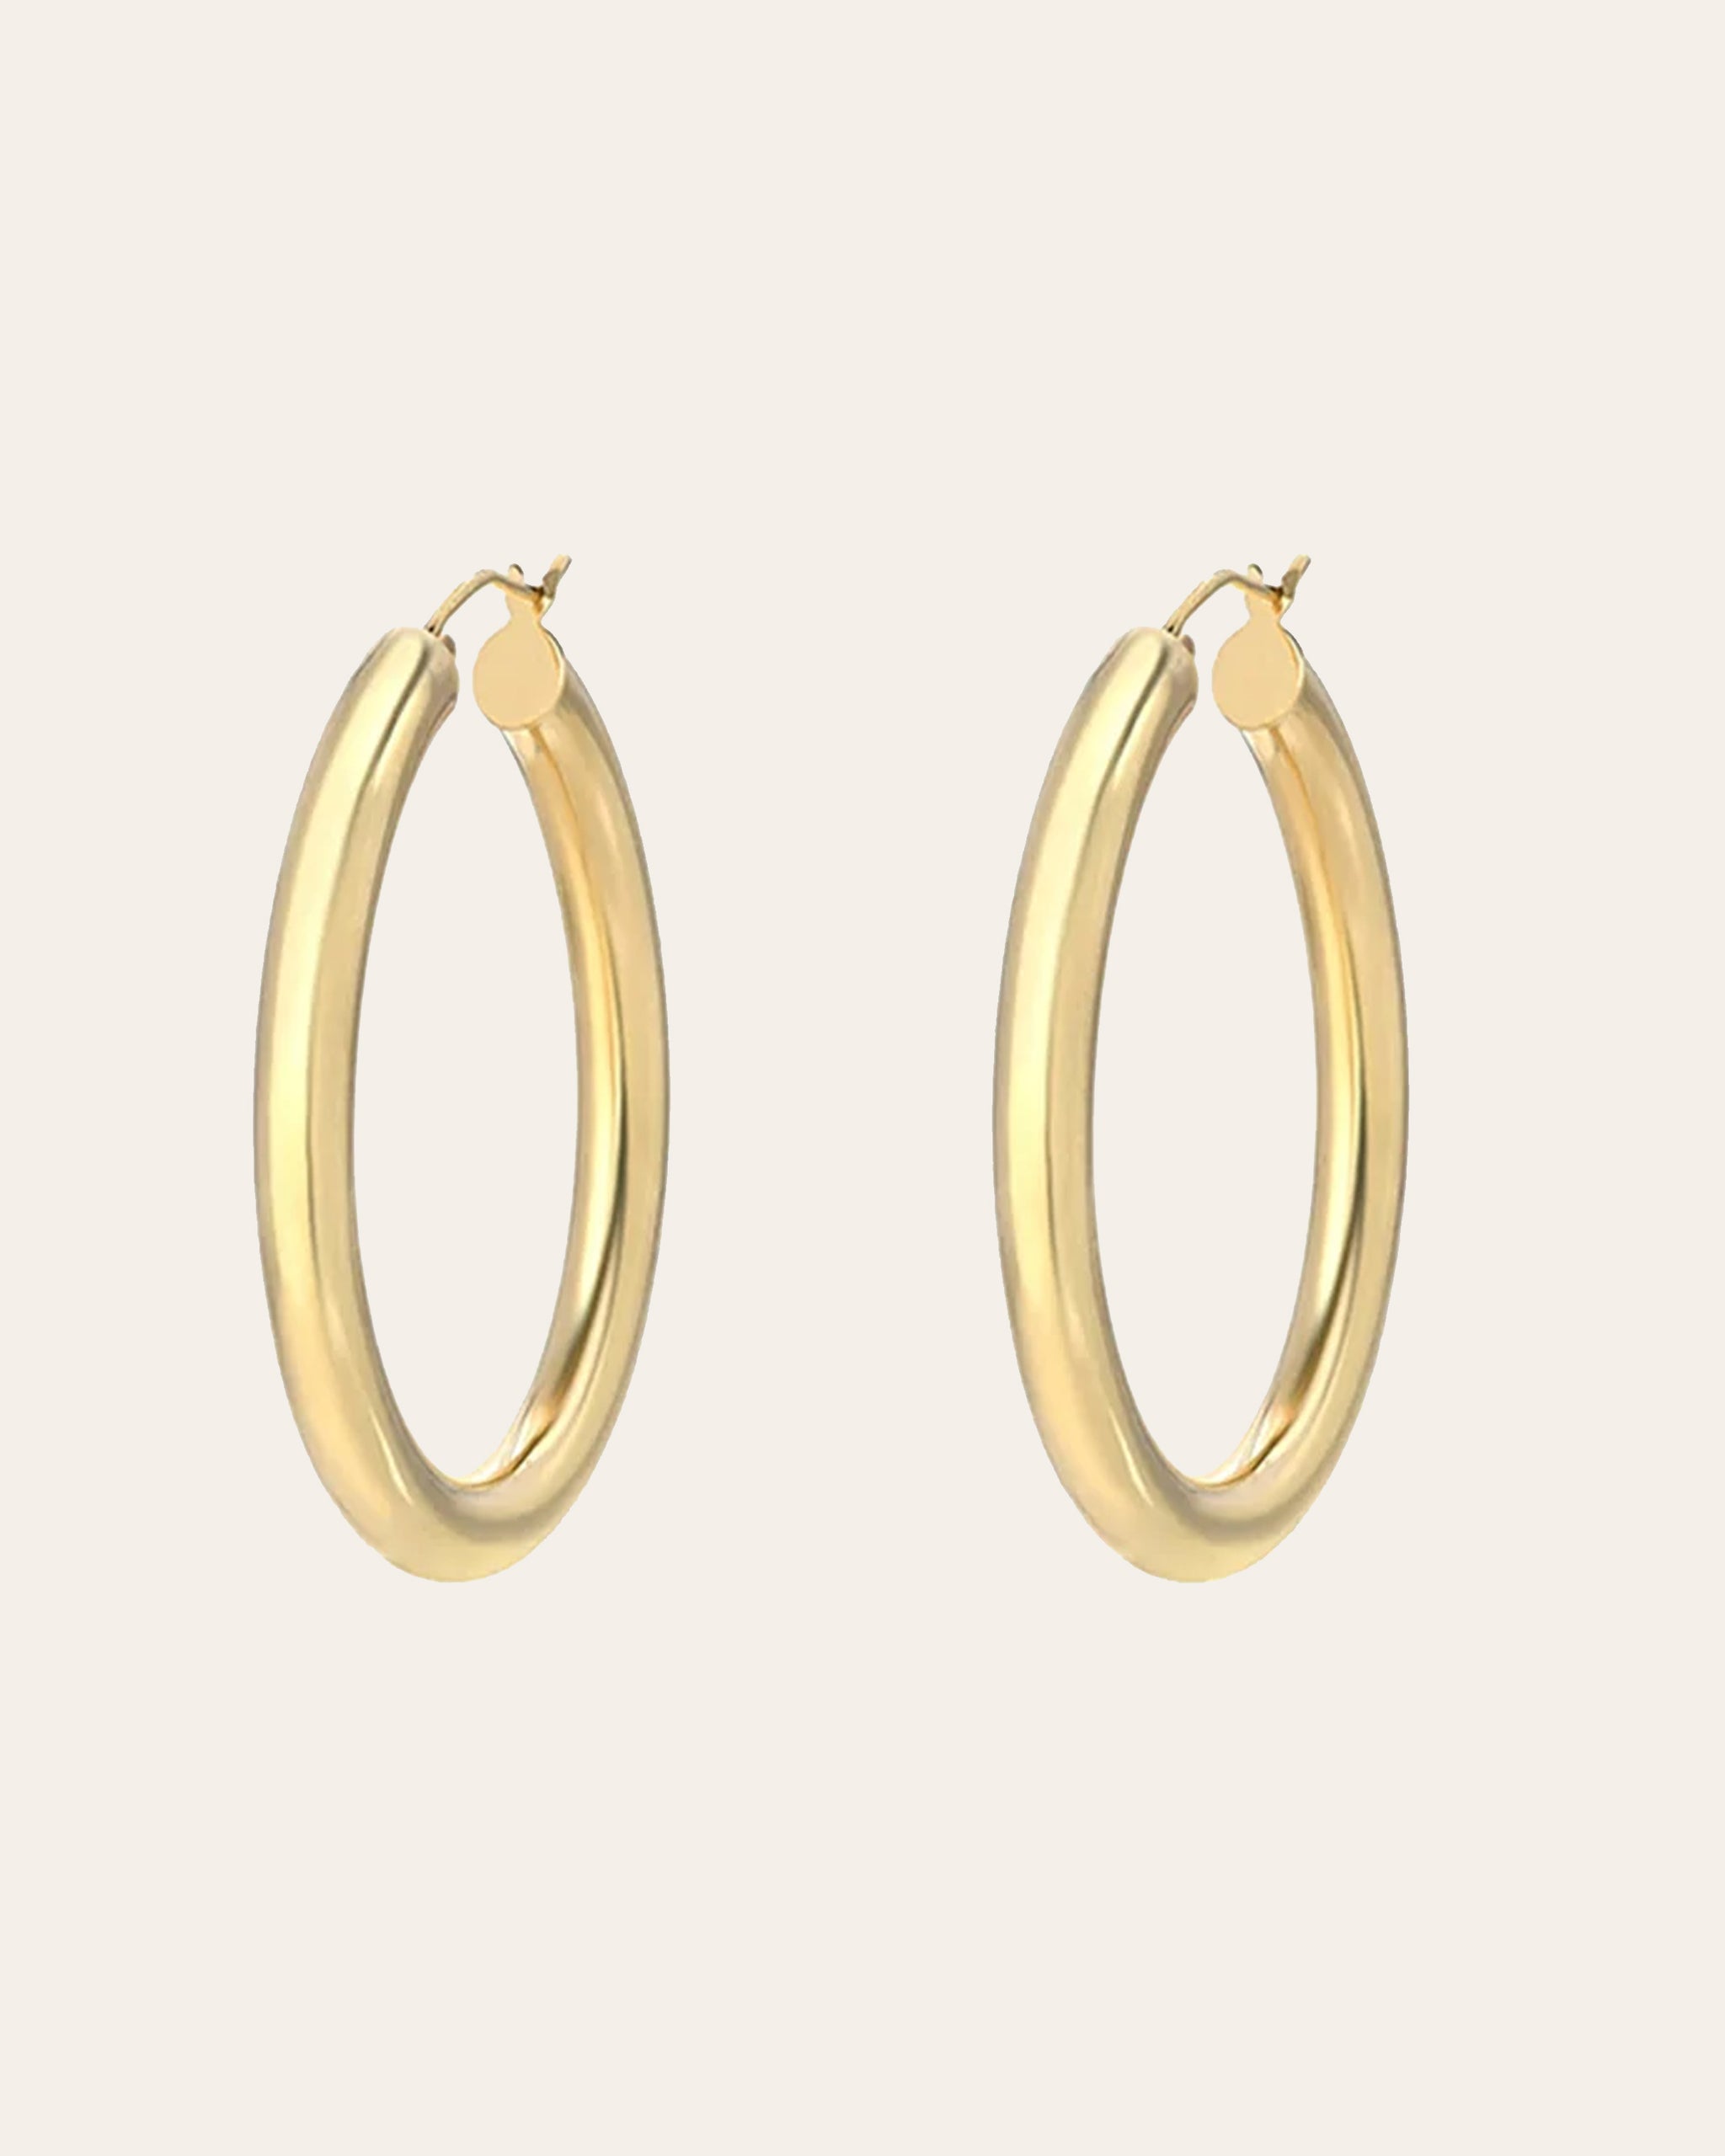 Buy Revere 9ct Gold Oval Creole Hoop Earrings | Womens earrings | Argos